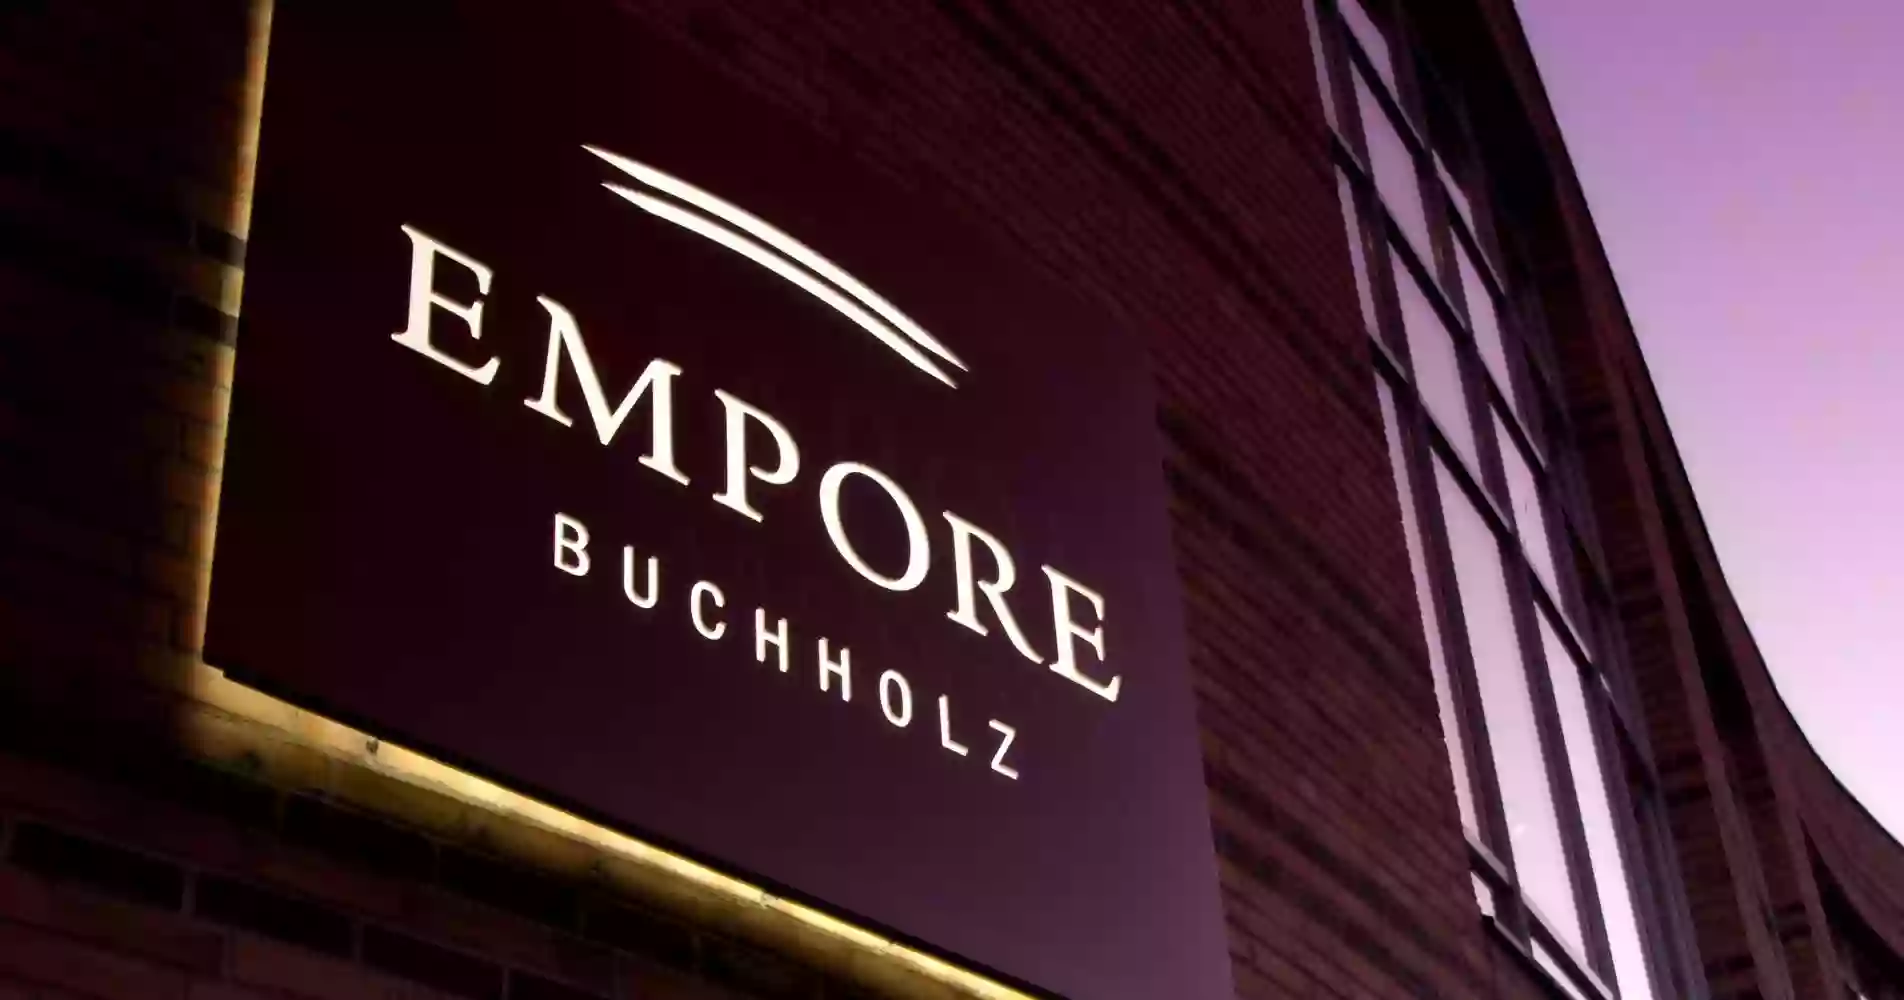 EMPORE Buchholz GmbH